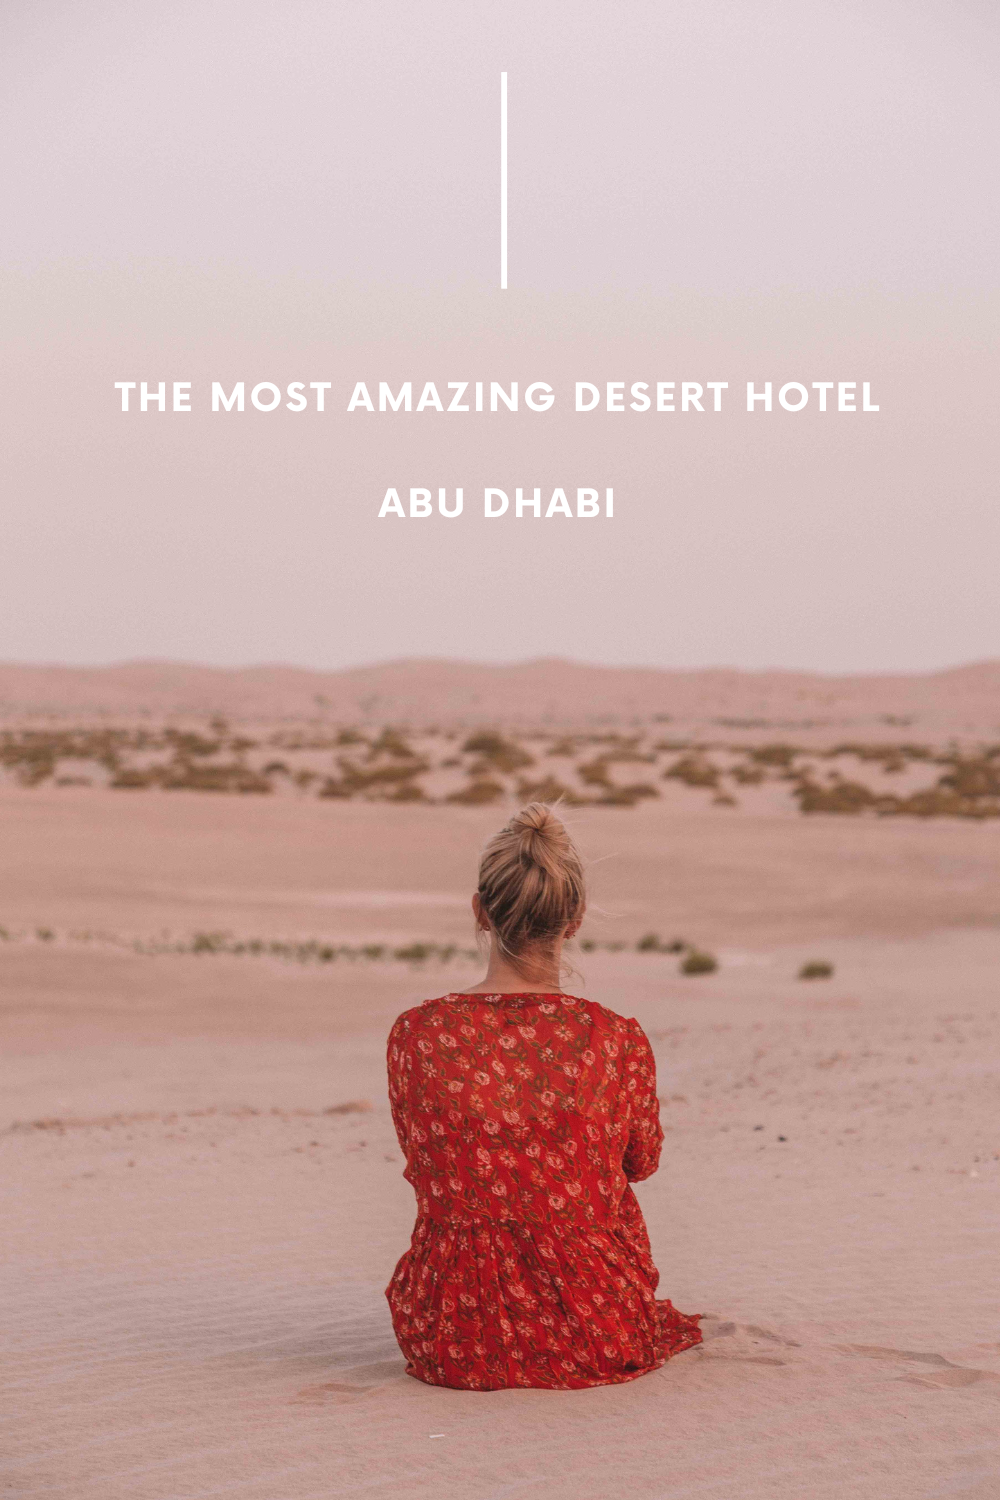 BEST DESERT HOTEL ABU DHABI